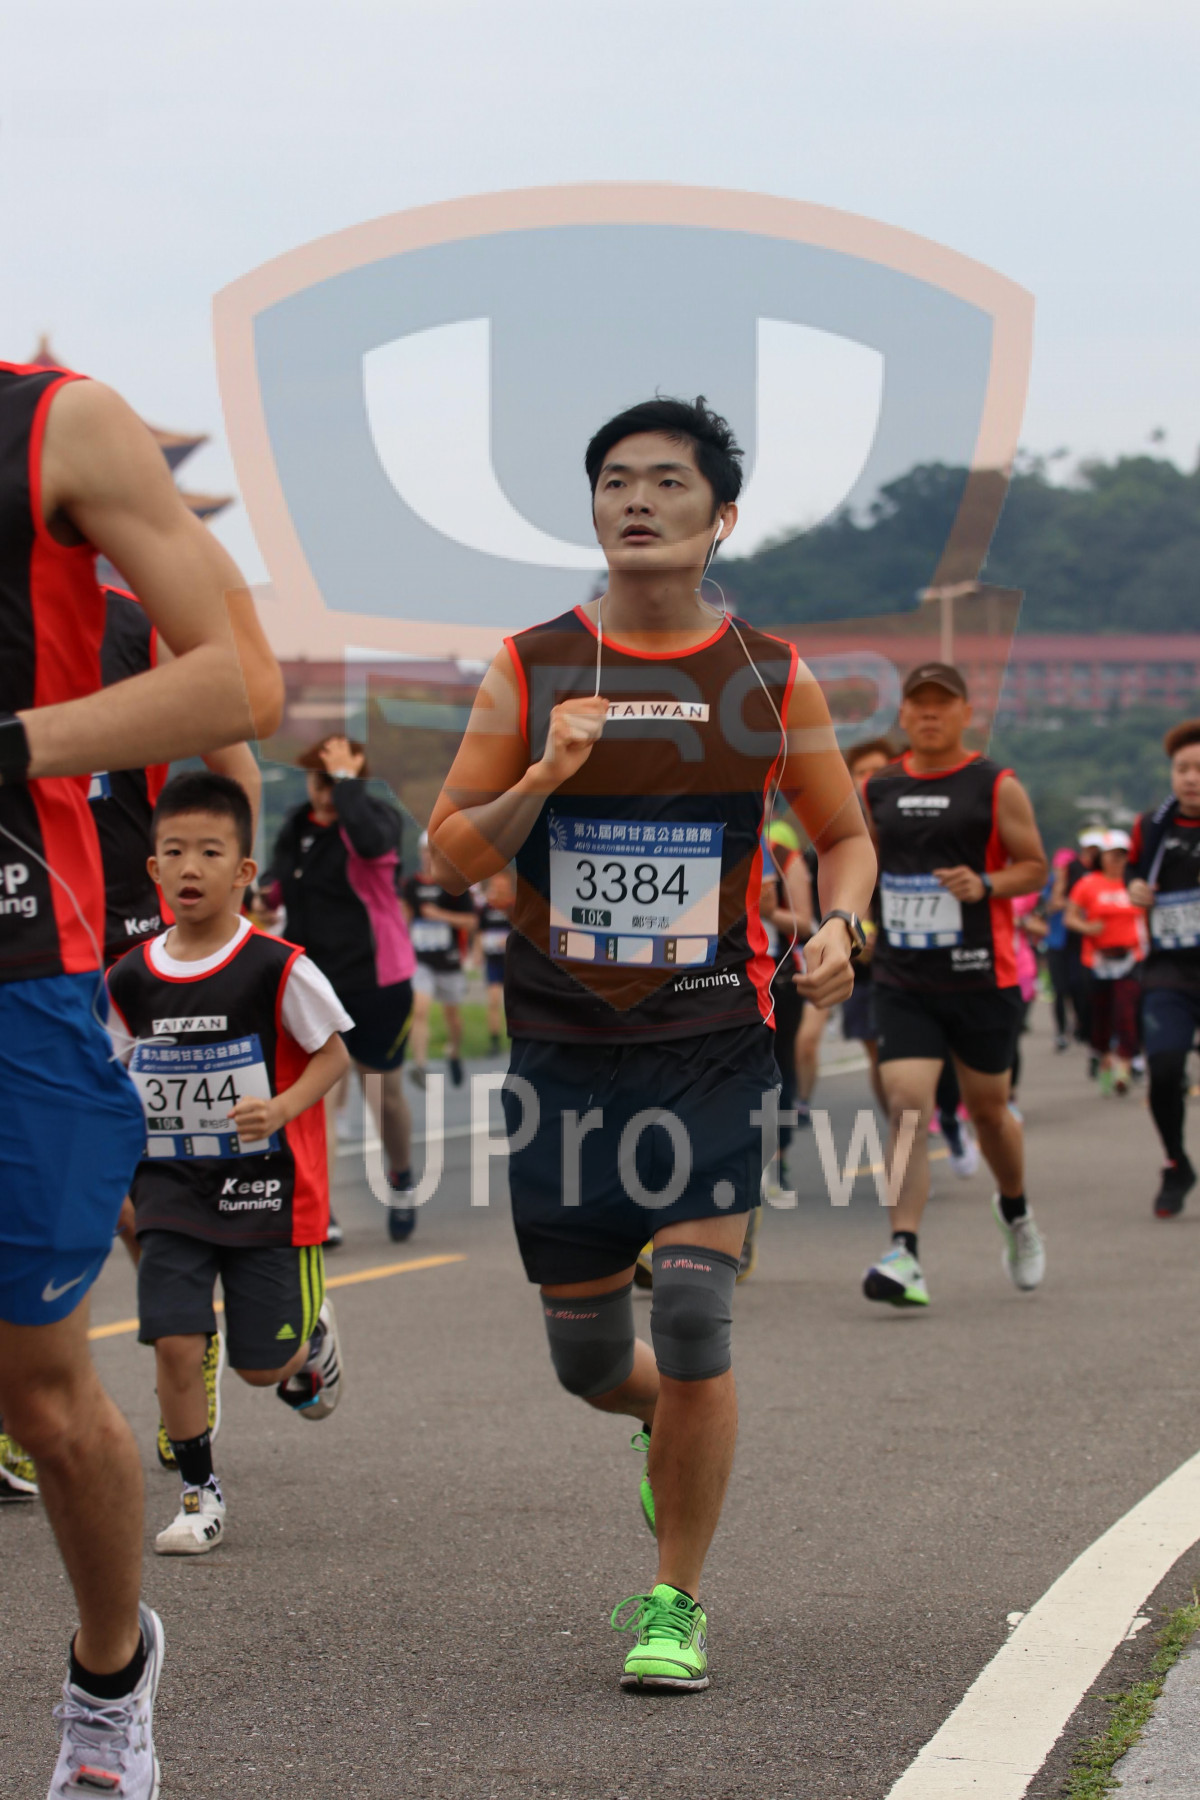 TAIWAN,,3384,ing,EIS ,Kunning,3744,Keep,Running|2018 第九屆阿甘盃公益路跑|Soryu Asuka Langley